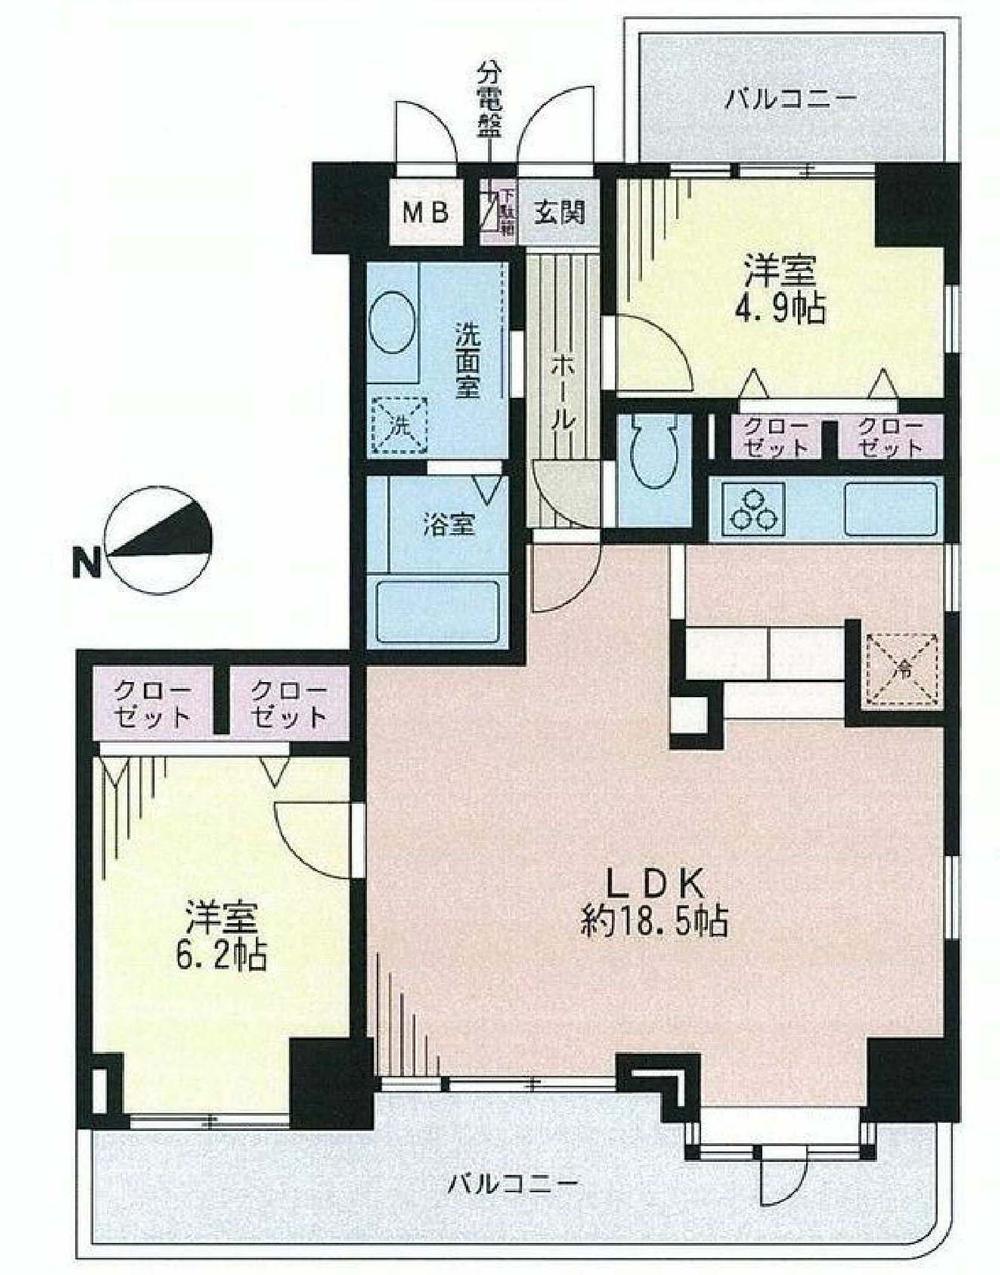 Floor plan. 2LDK, Price 34,500,000 yen, Occupied area 65.32 sq m , Large 2LDK of balcony area 15.22 sq m 65 sq m more than